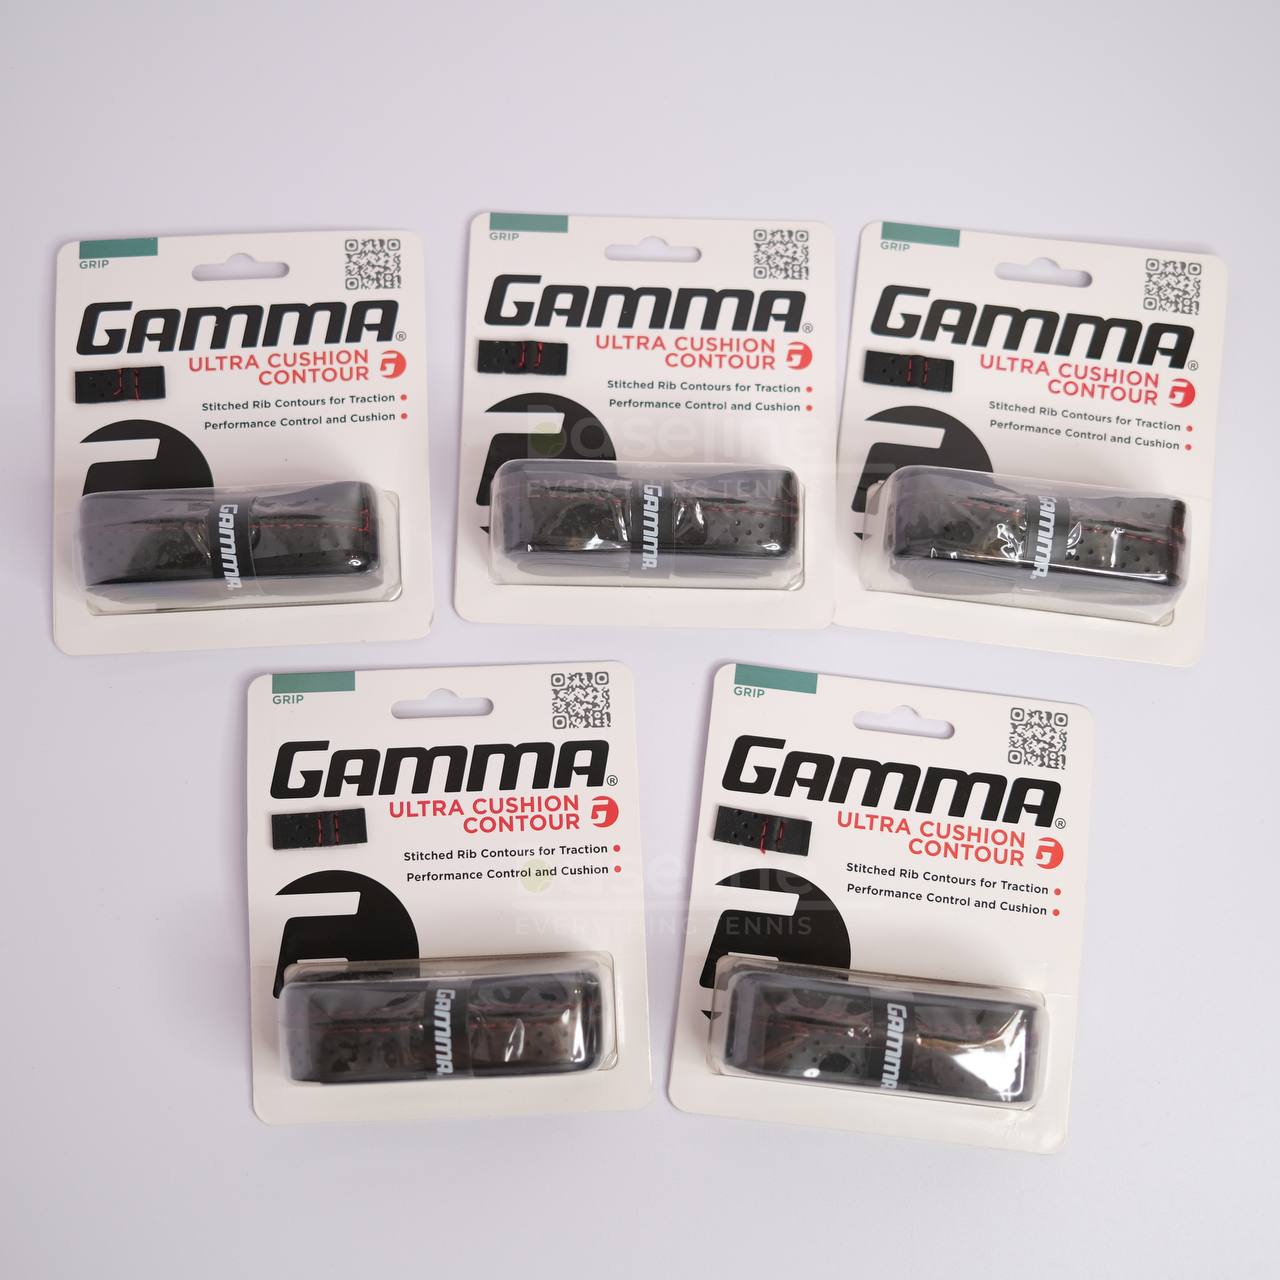 Gamma Ultra Cushion Contour Replacement Grip